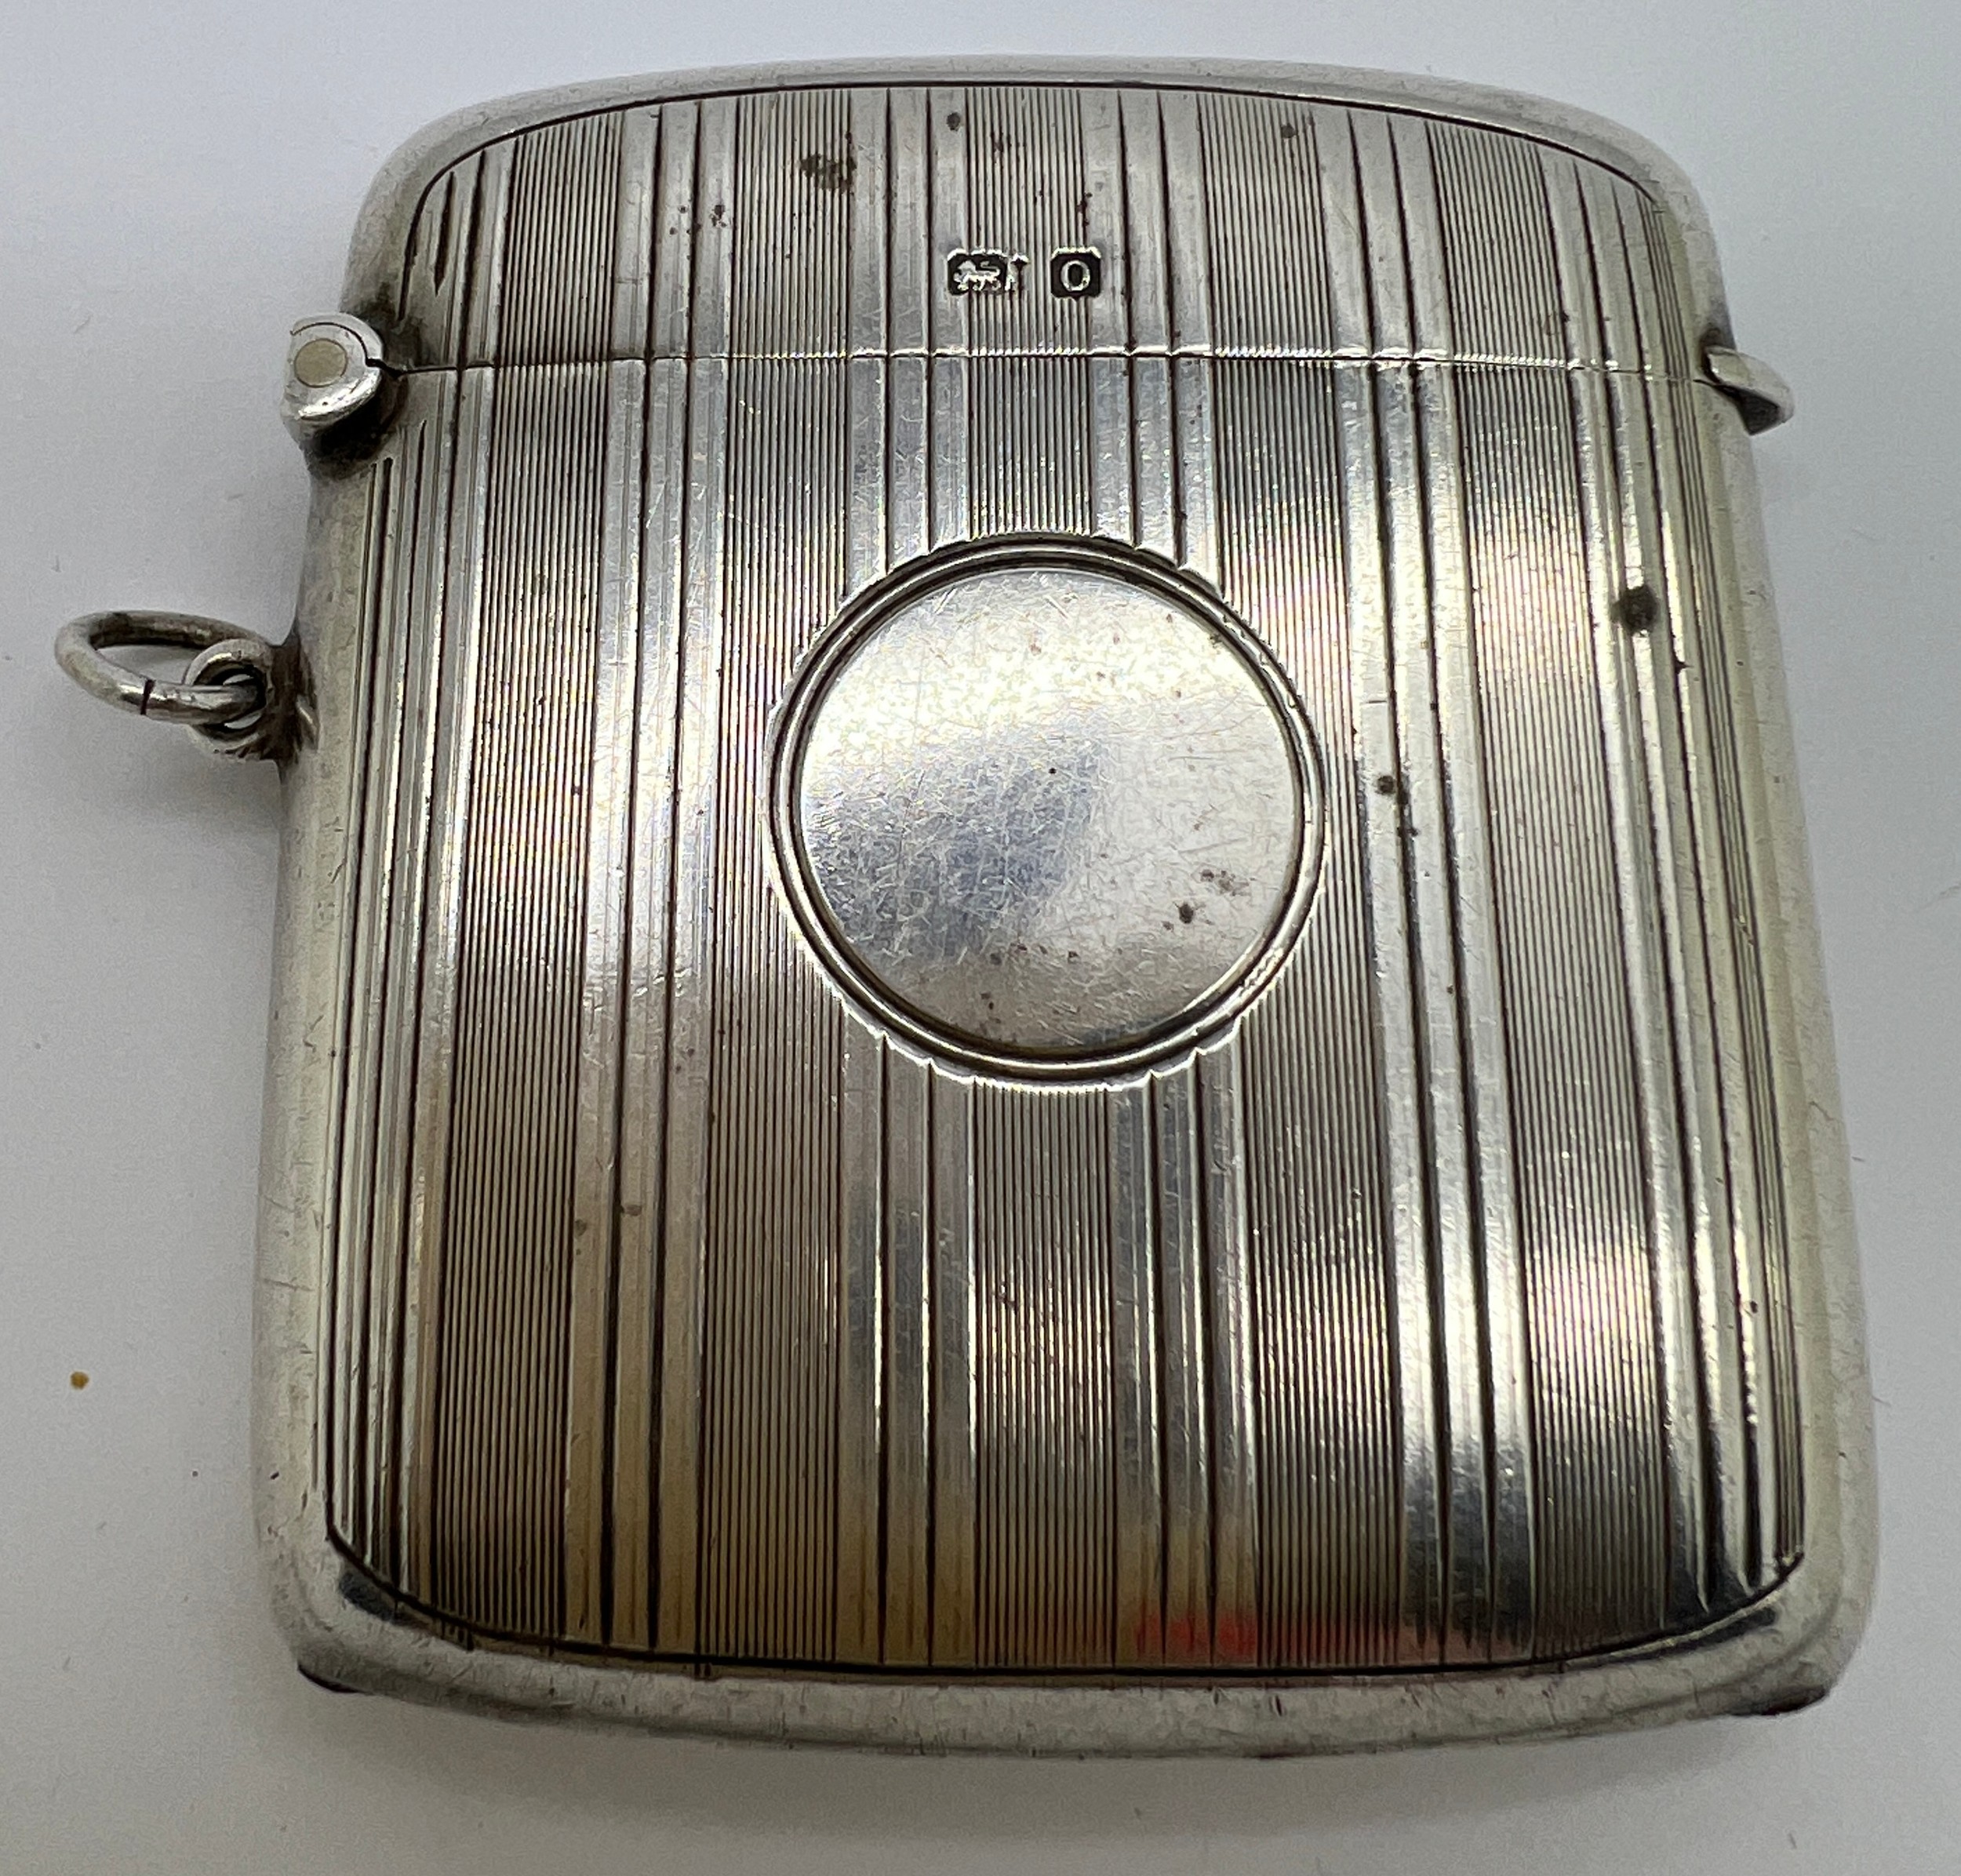 Silver vesta case Birmingham 1913, maker Horace Woodward & Co Ltd. Weight 40.1gm. 5.5 x 5 cm. Vacant